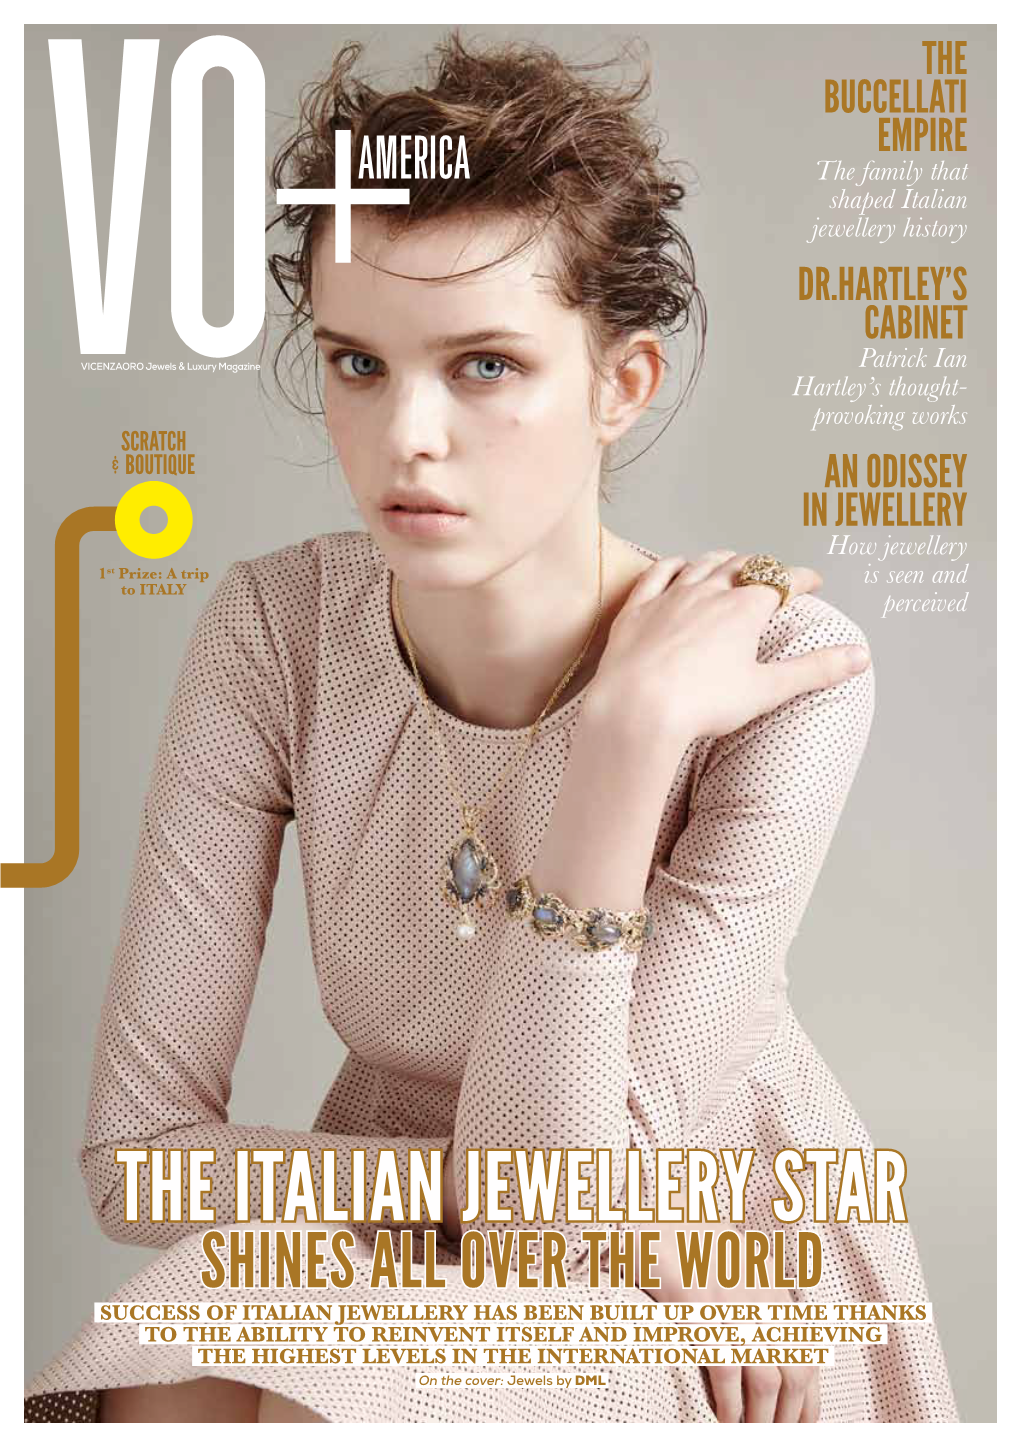 The Italian Jewellery Star